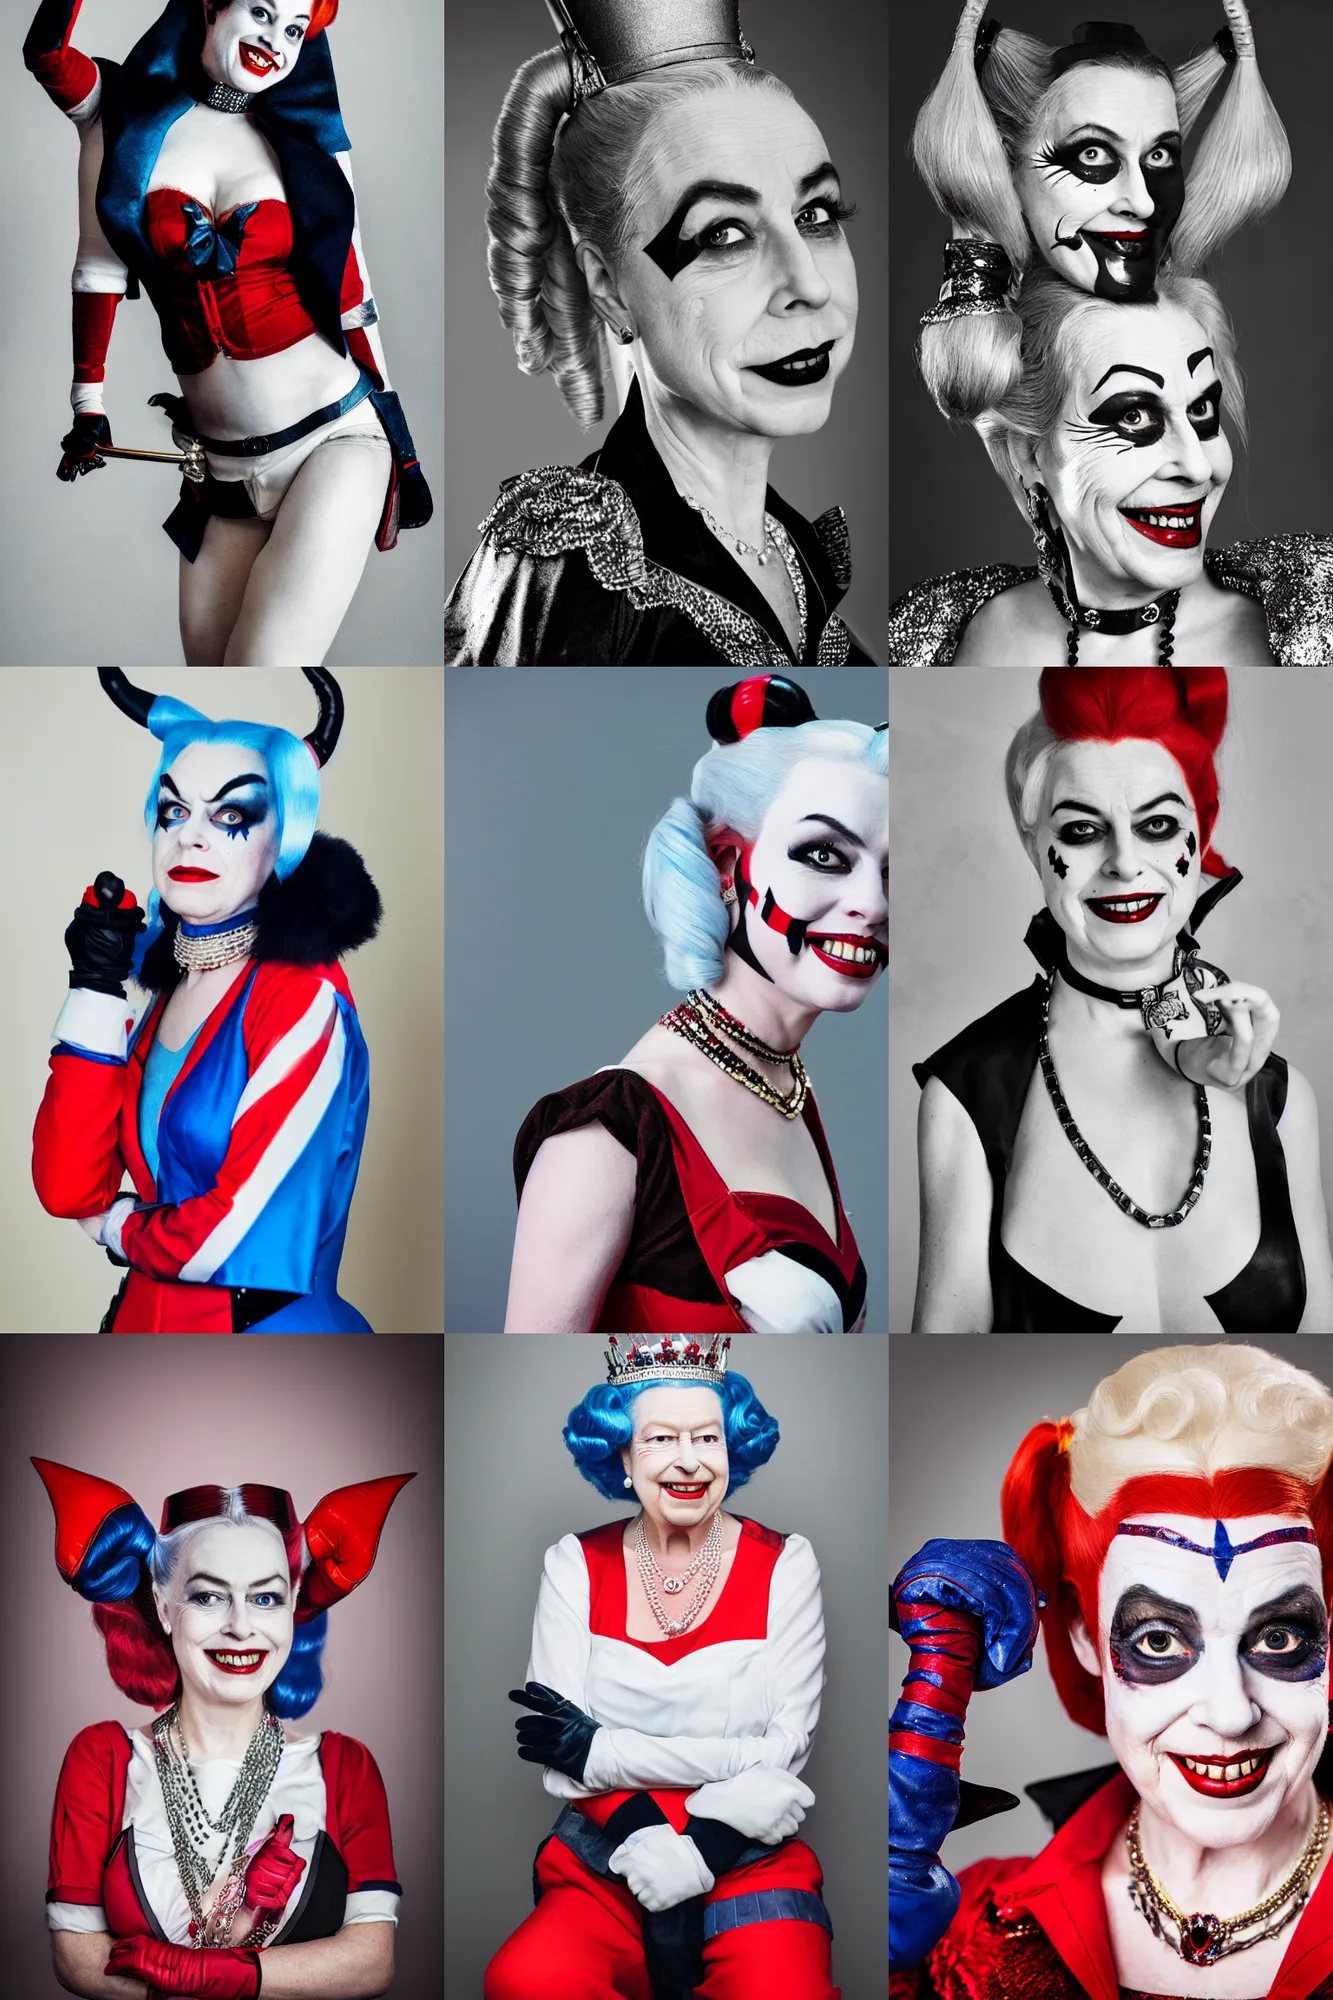 Prompt: Queen Elizabeth dressed as Harley Quinn, professional portrait photo, 100 mm lens